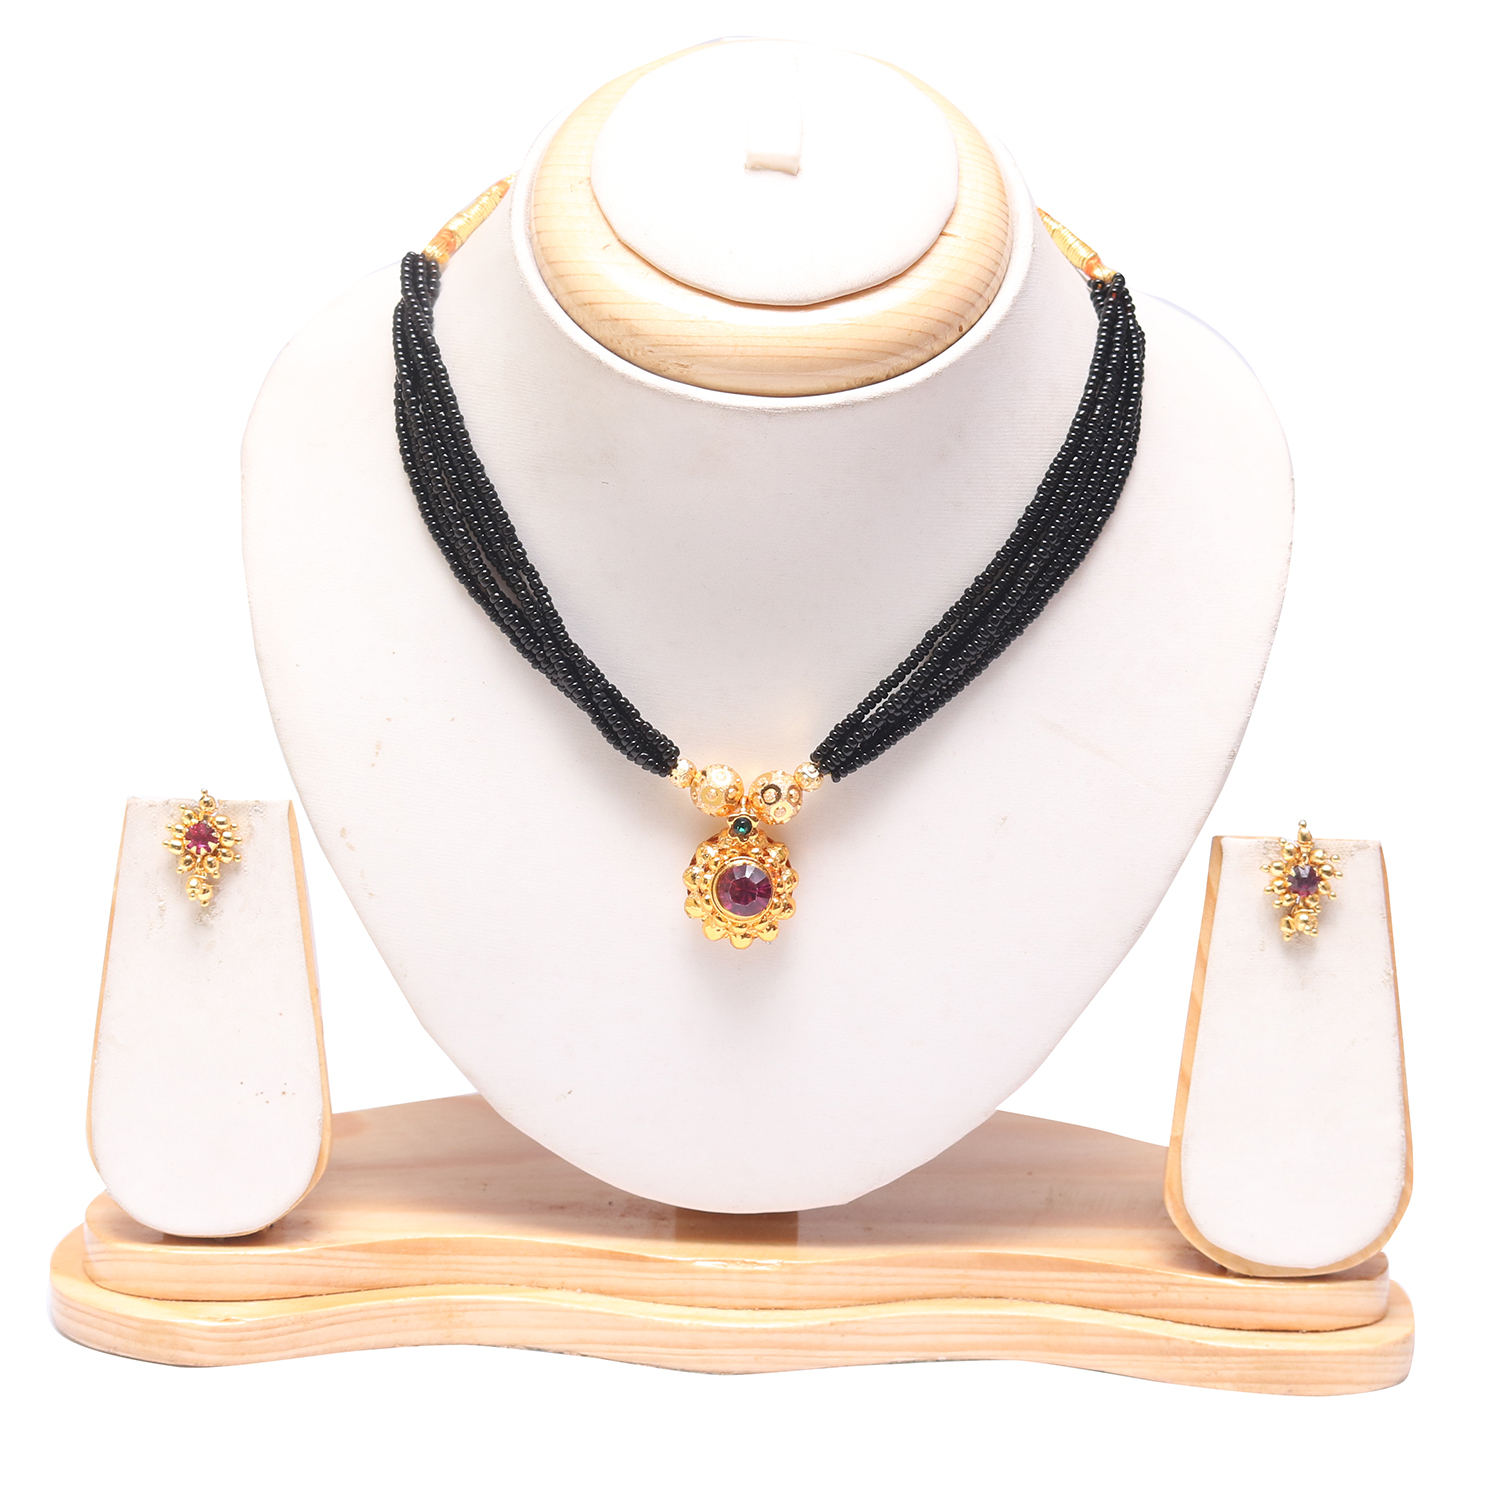 Traditional Maharashtrian Jewellery Combo, Traditional Jewelry, ट्रेडिशनल  ज्वेलरी - Beeline, Pune | ID: 2850872341397